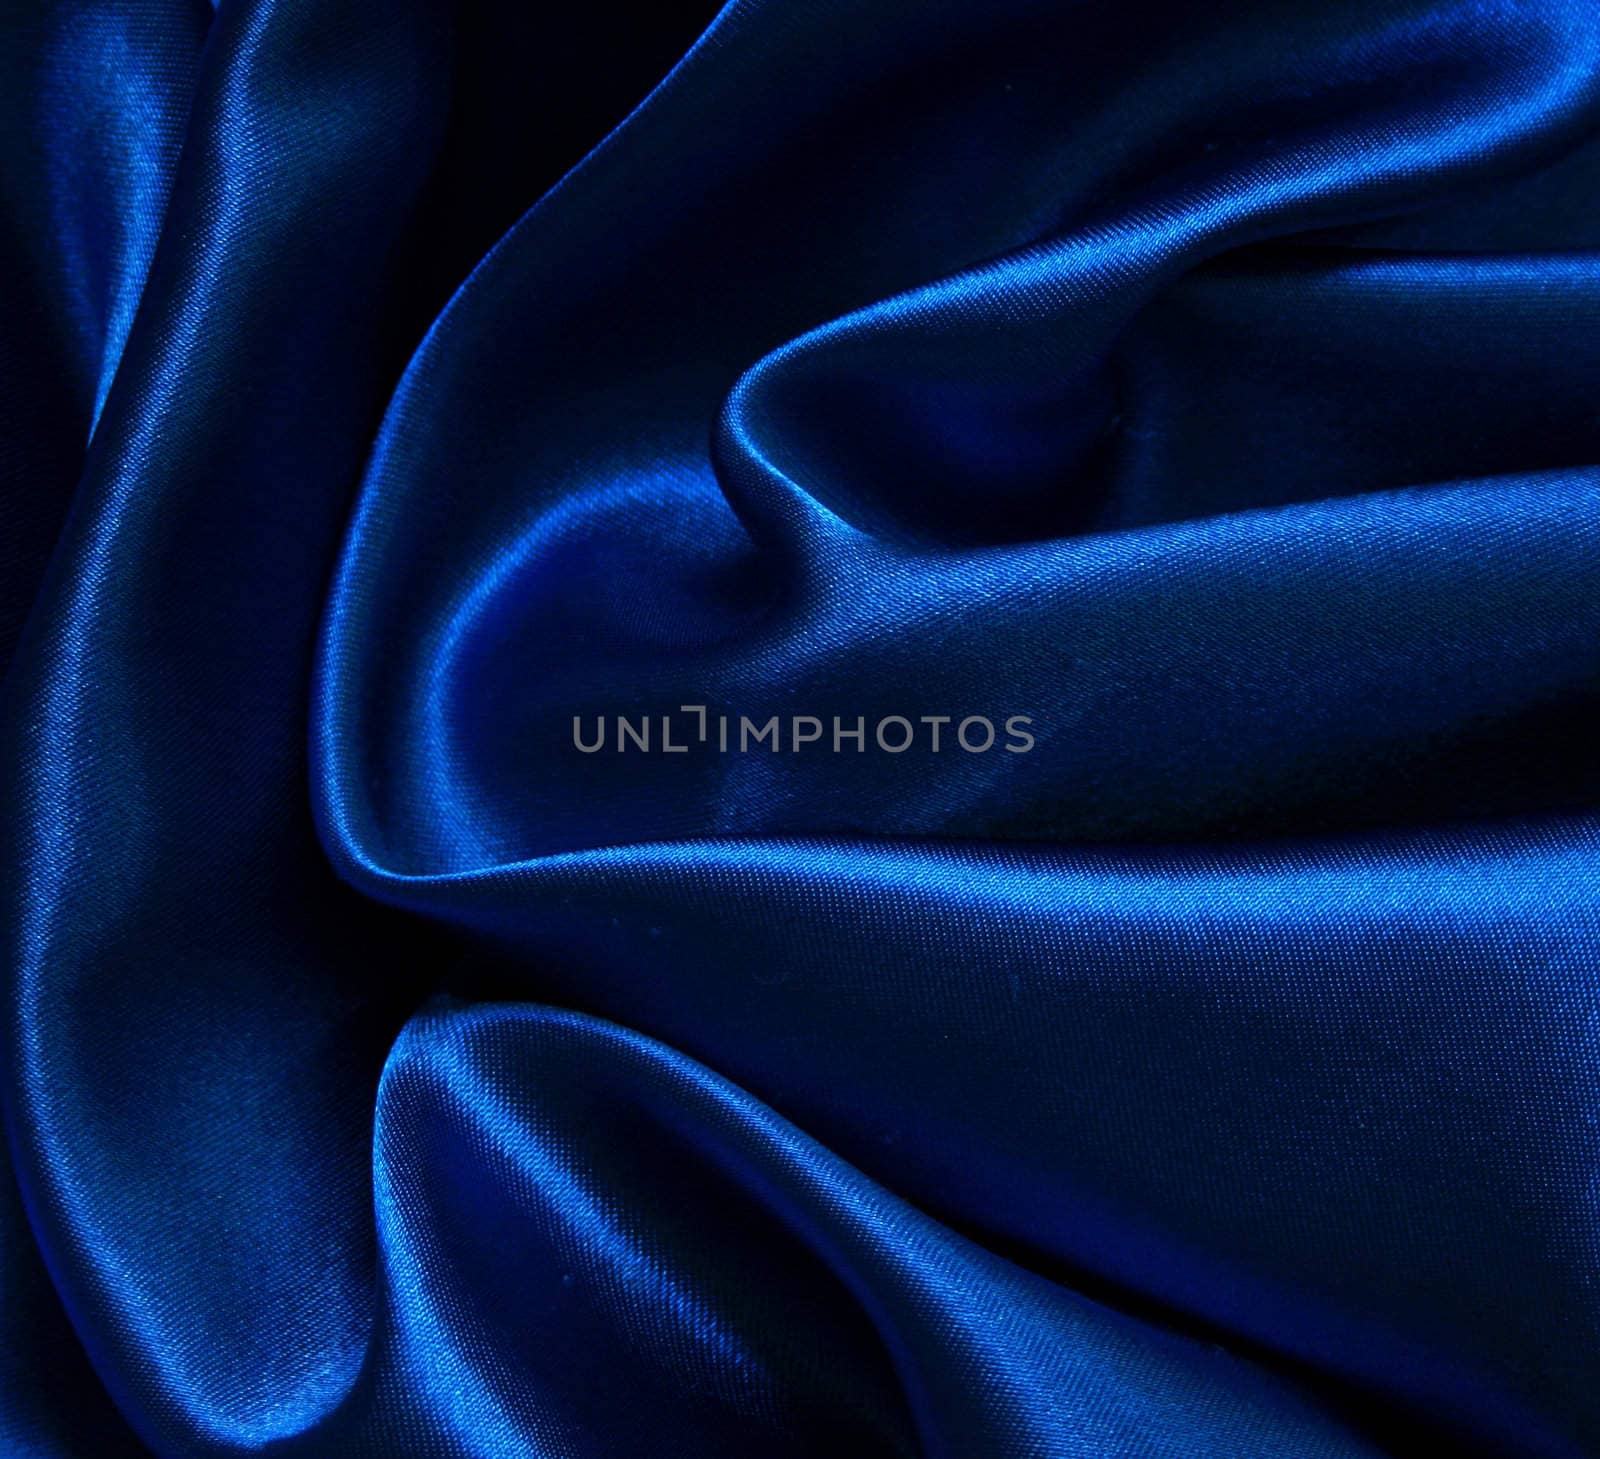 Smooth elegant blue silk  by oxanatravel